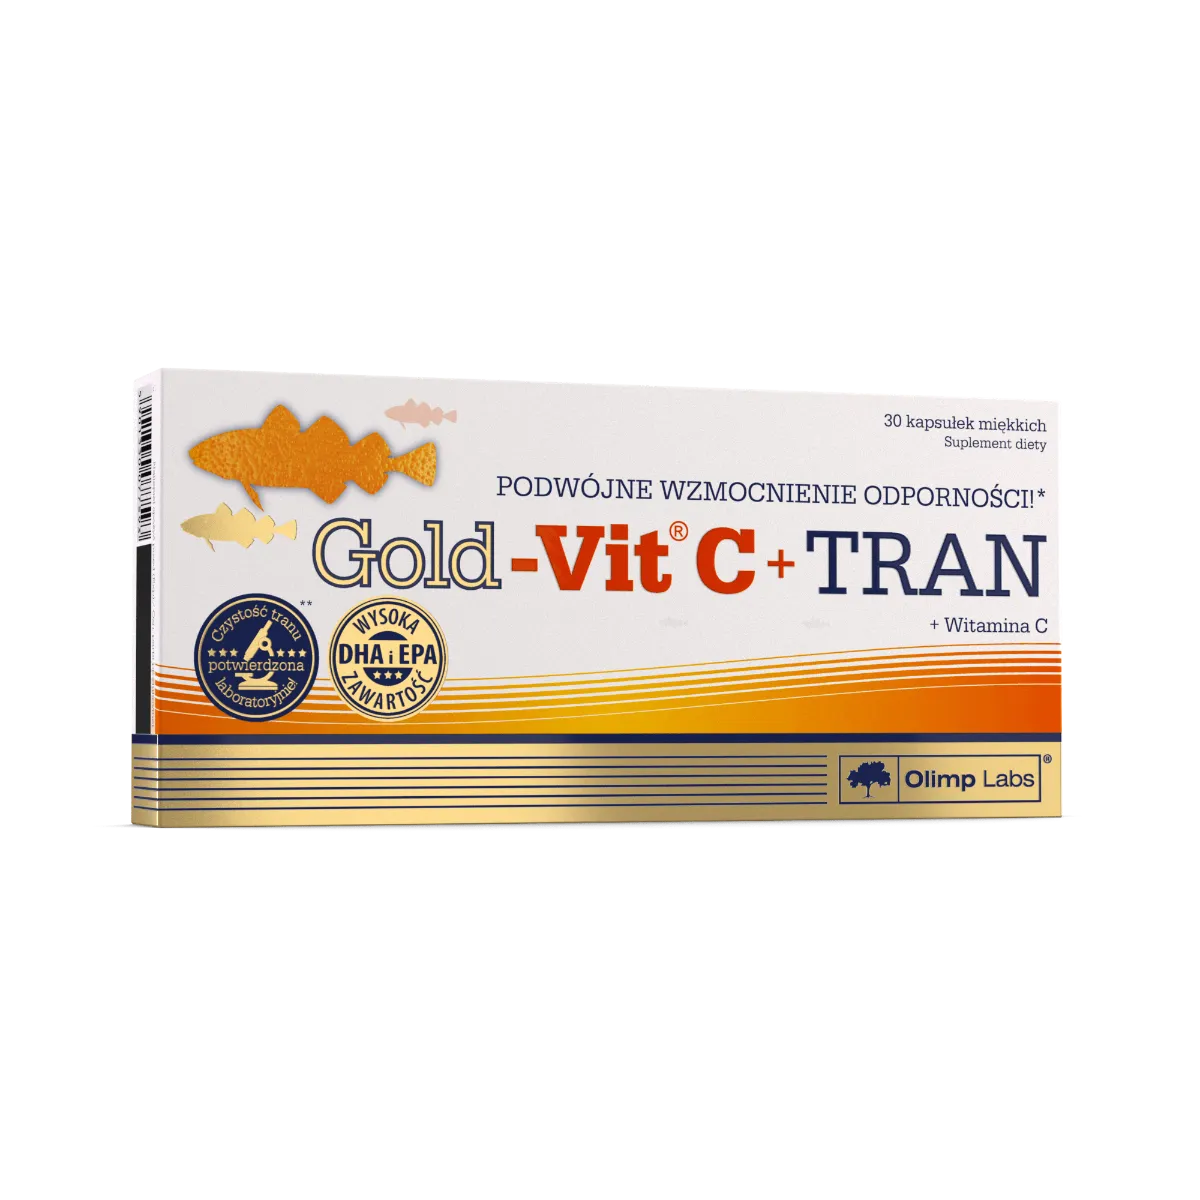 Gold-Vit C + Tran,  suplement diety, 30 kapsułek